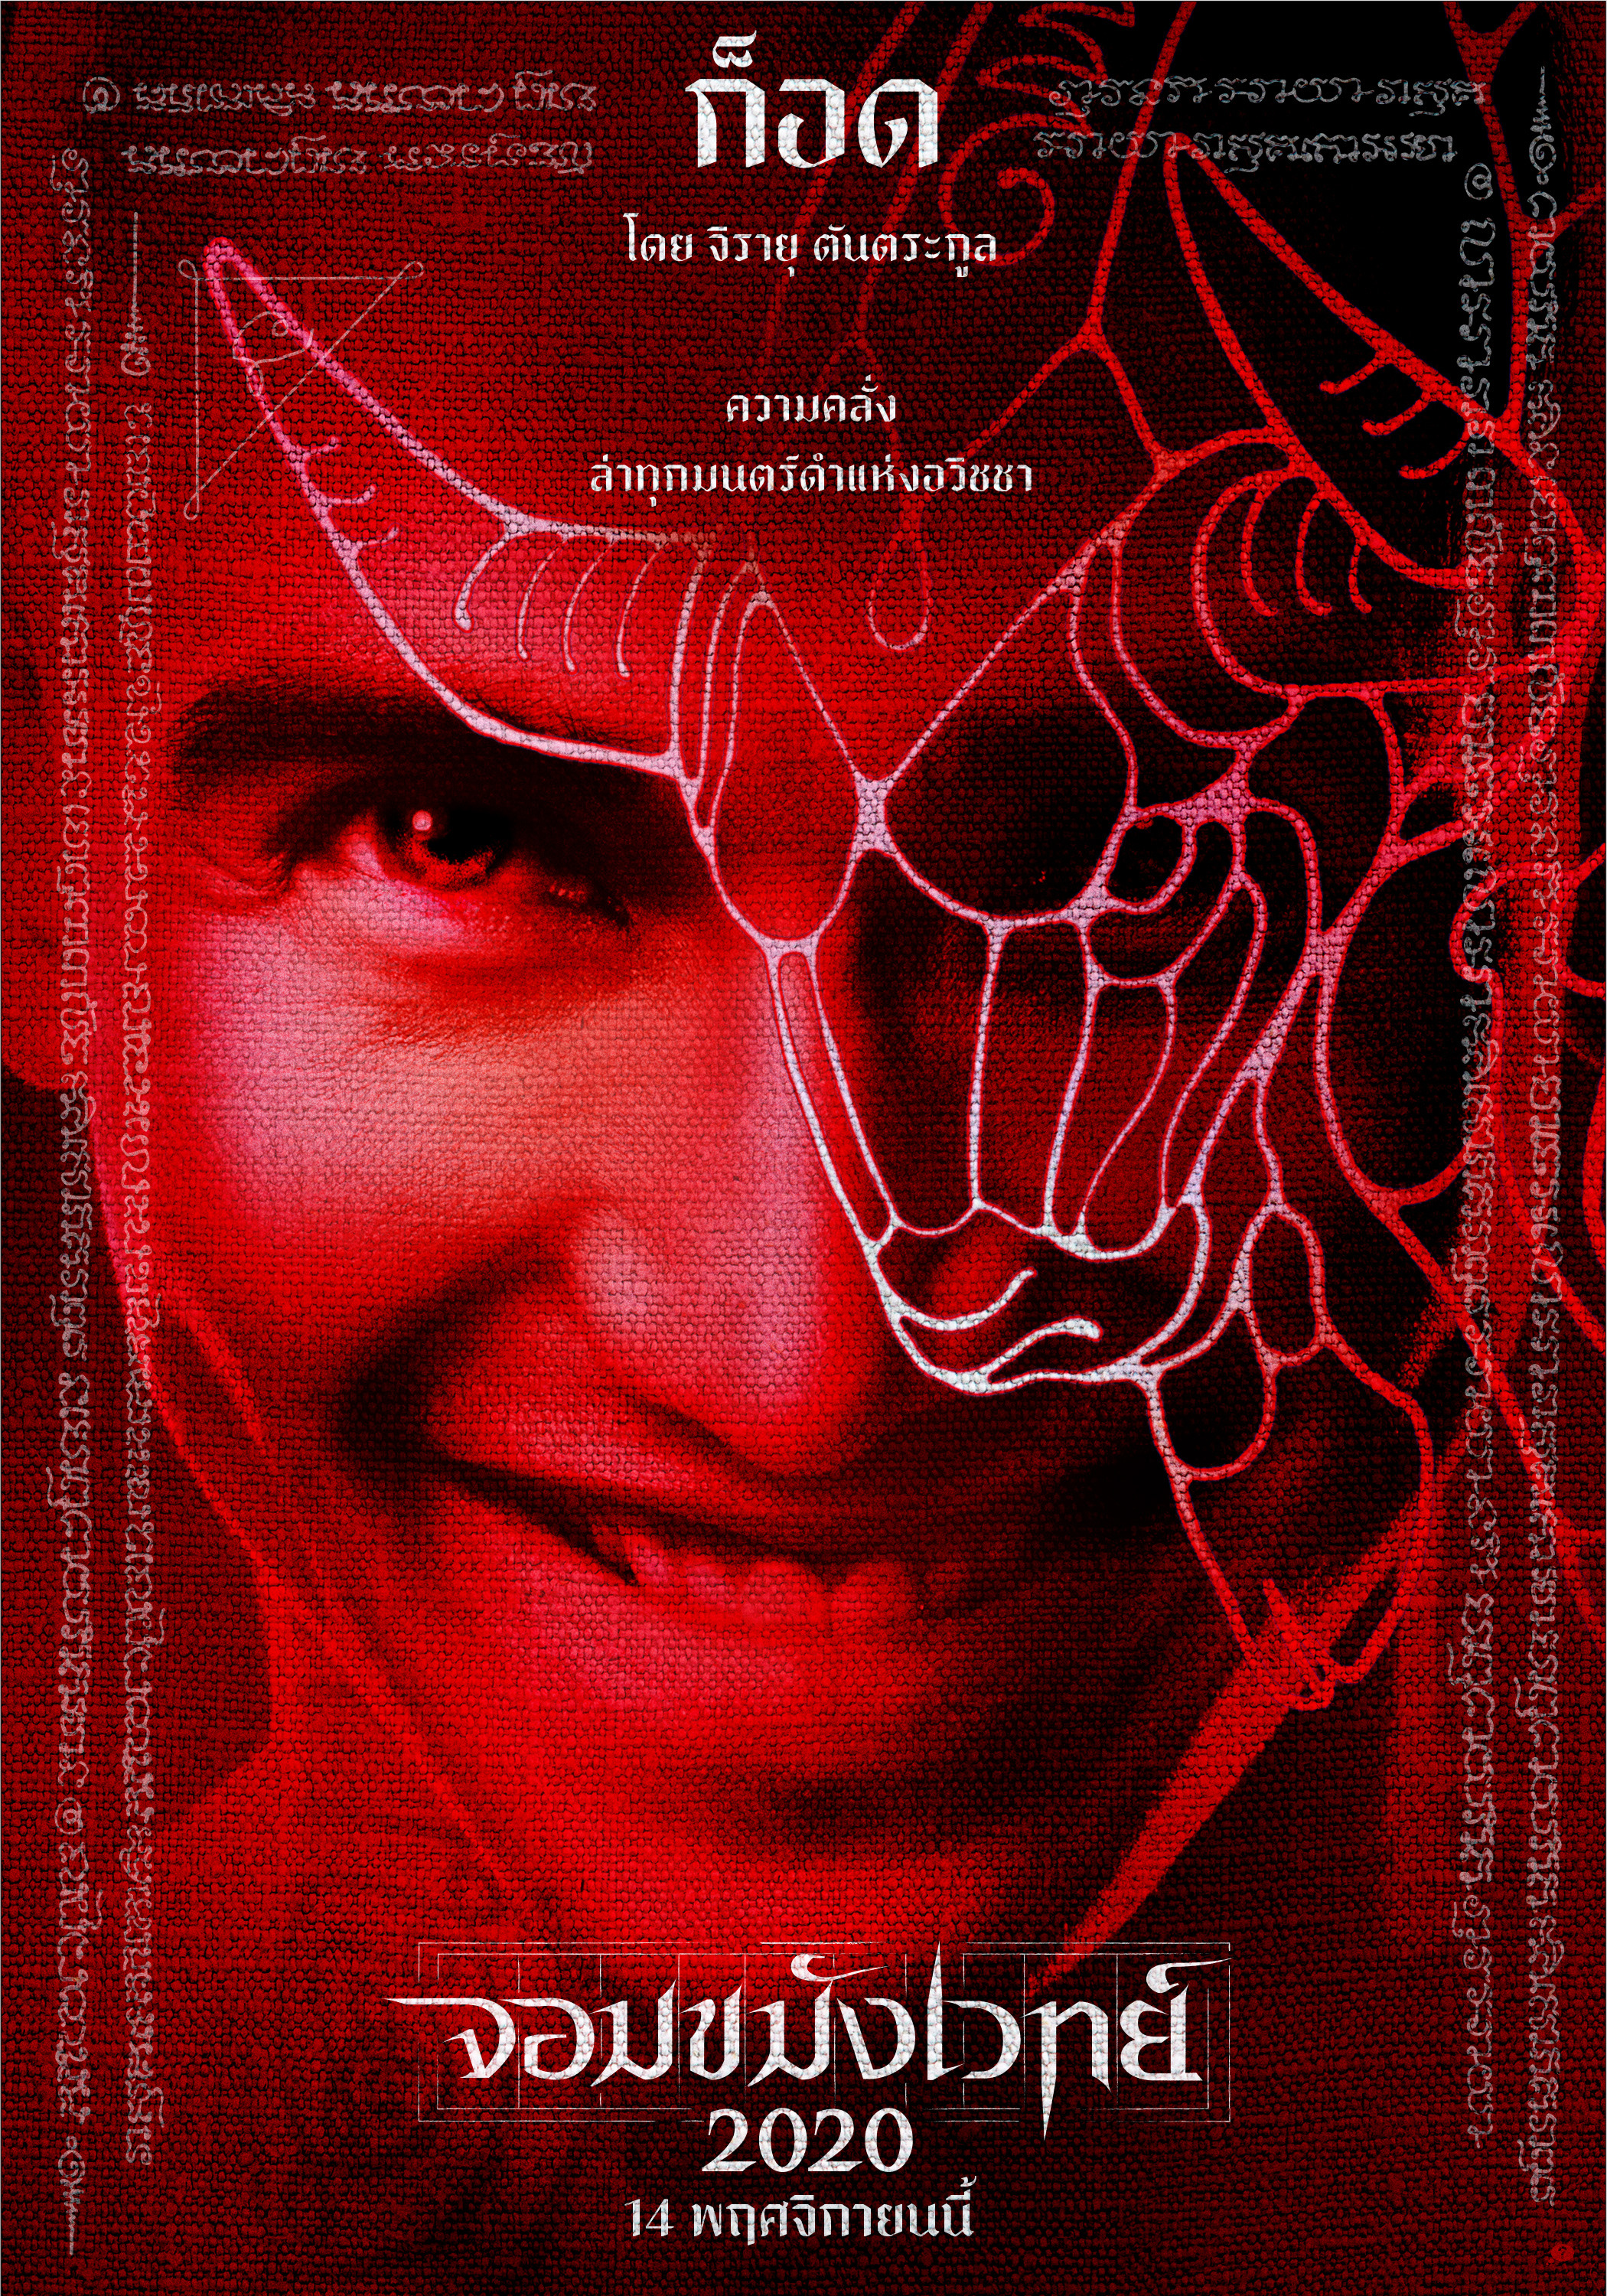 Mega Sized Movie Poster Image for Necromancer 2020 (#9 of 11)